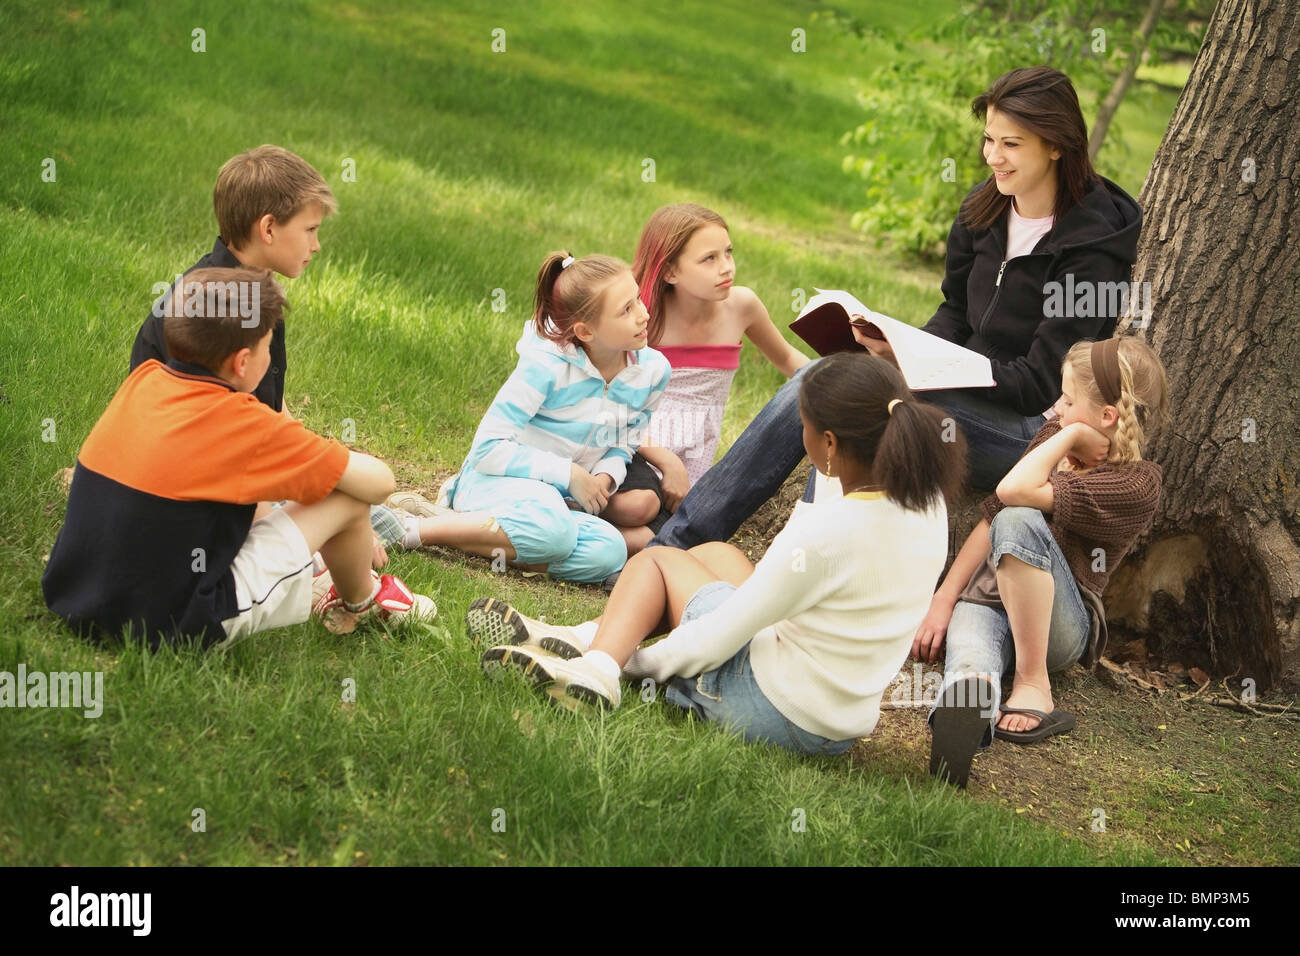 Edmonton, Alberta, Canada; A Woman Teaches A Group Of Children In A Park Stock Photo